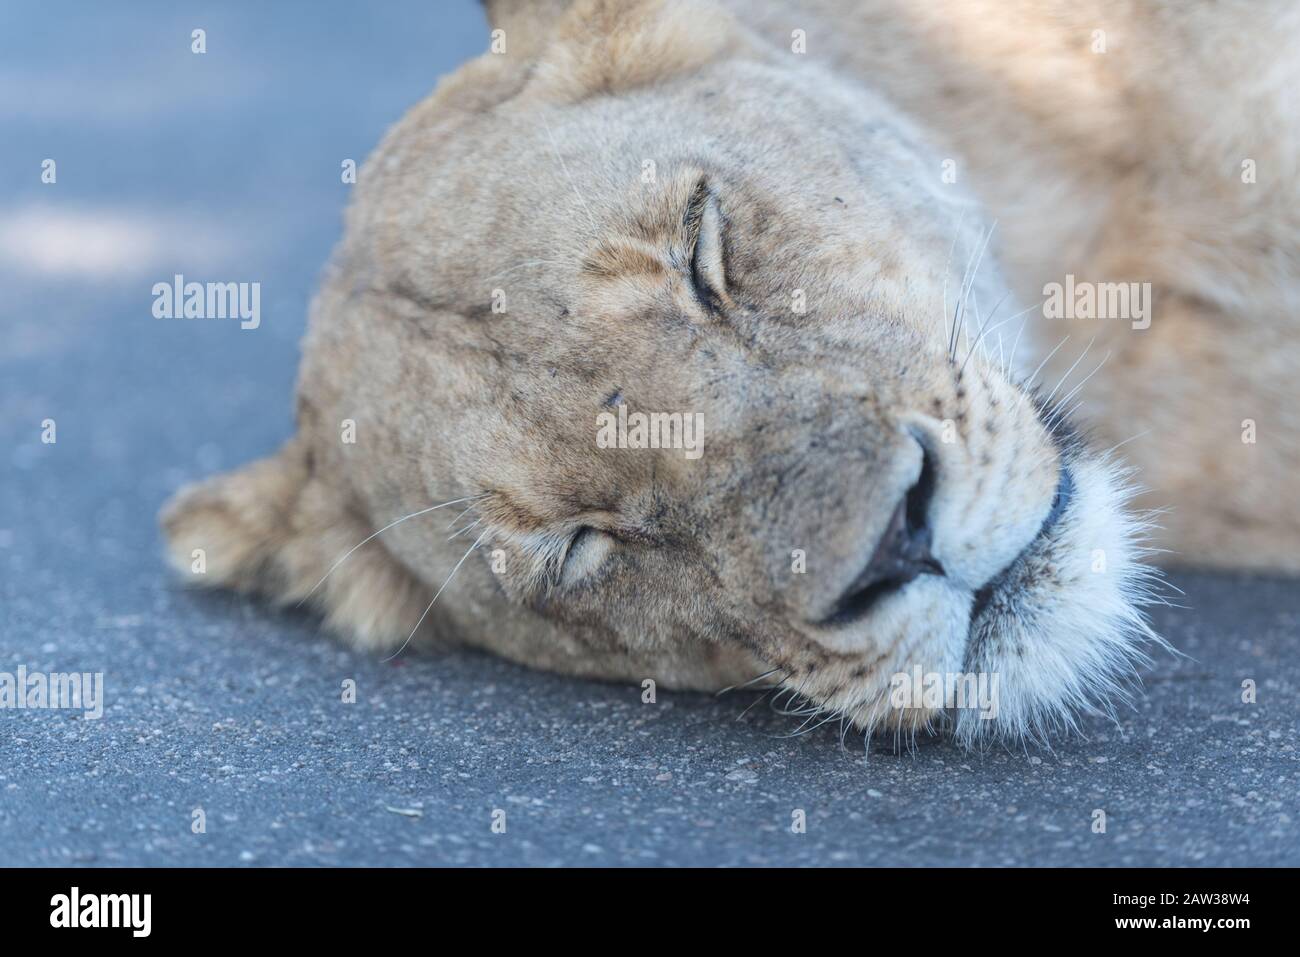 Lion sleeping Stock Photo